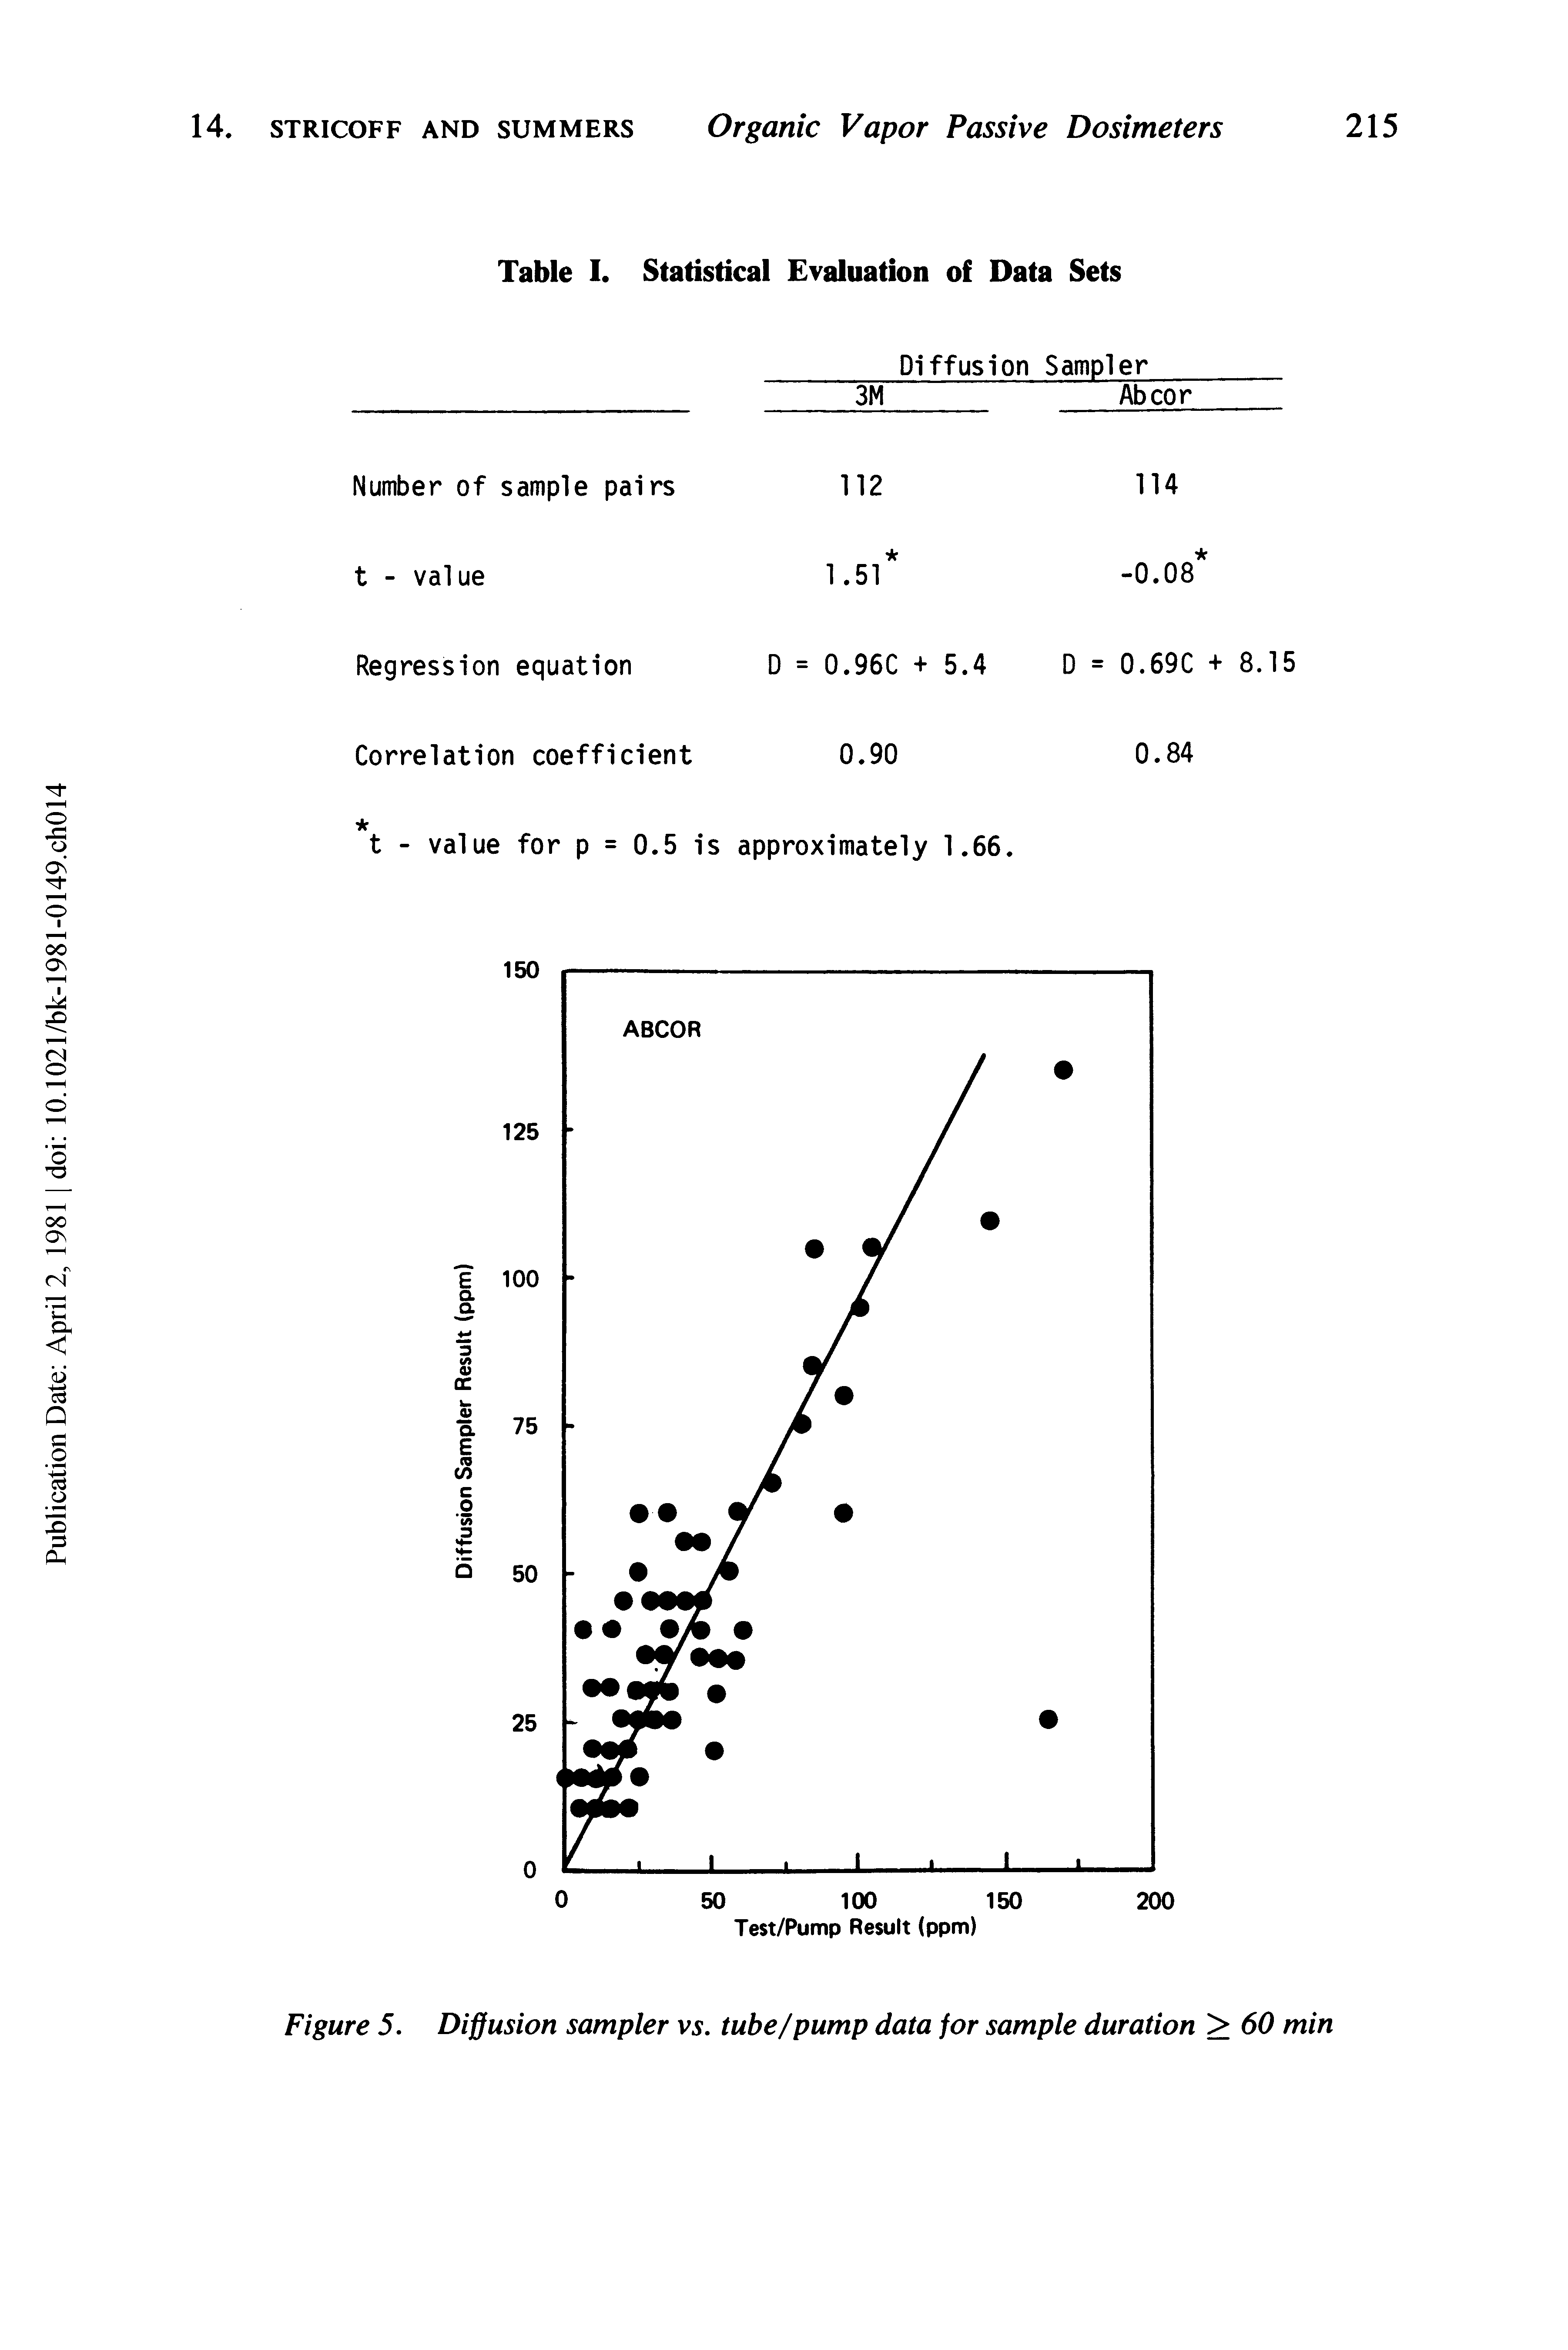 Figure 5. Diffusion sampler vs. tube/pump data for sample duration > 60 min...